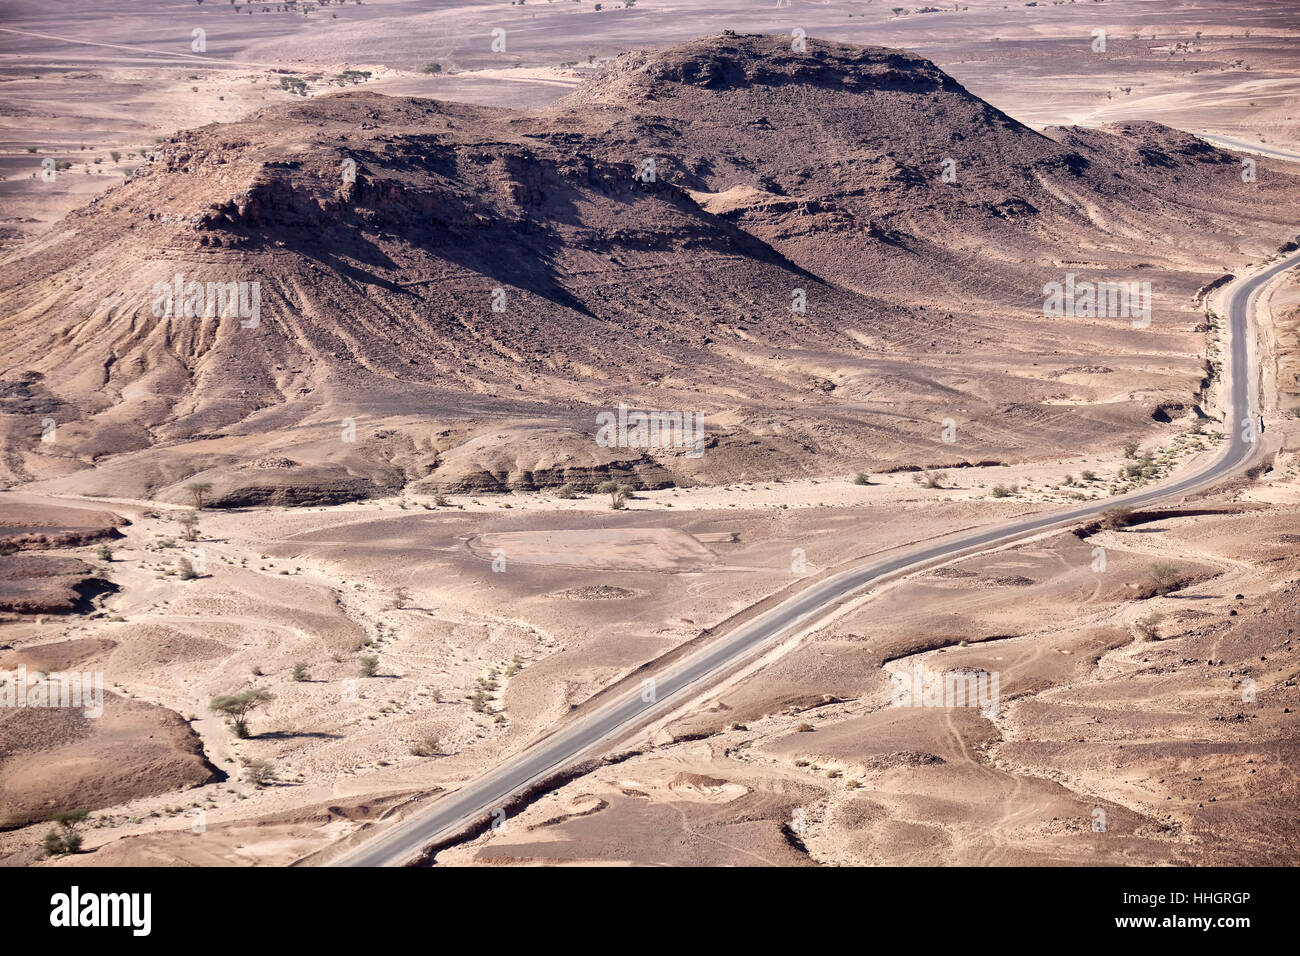 mountains, desert, wasteland, dry, dried up, barren, arid, slim, sligth, lean, Stock Photo